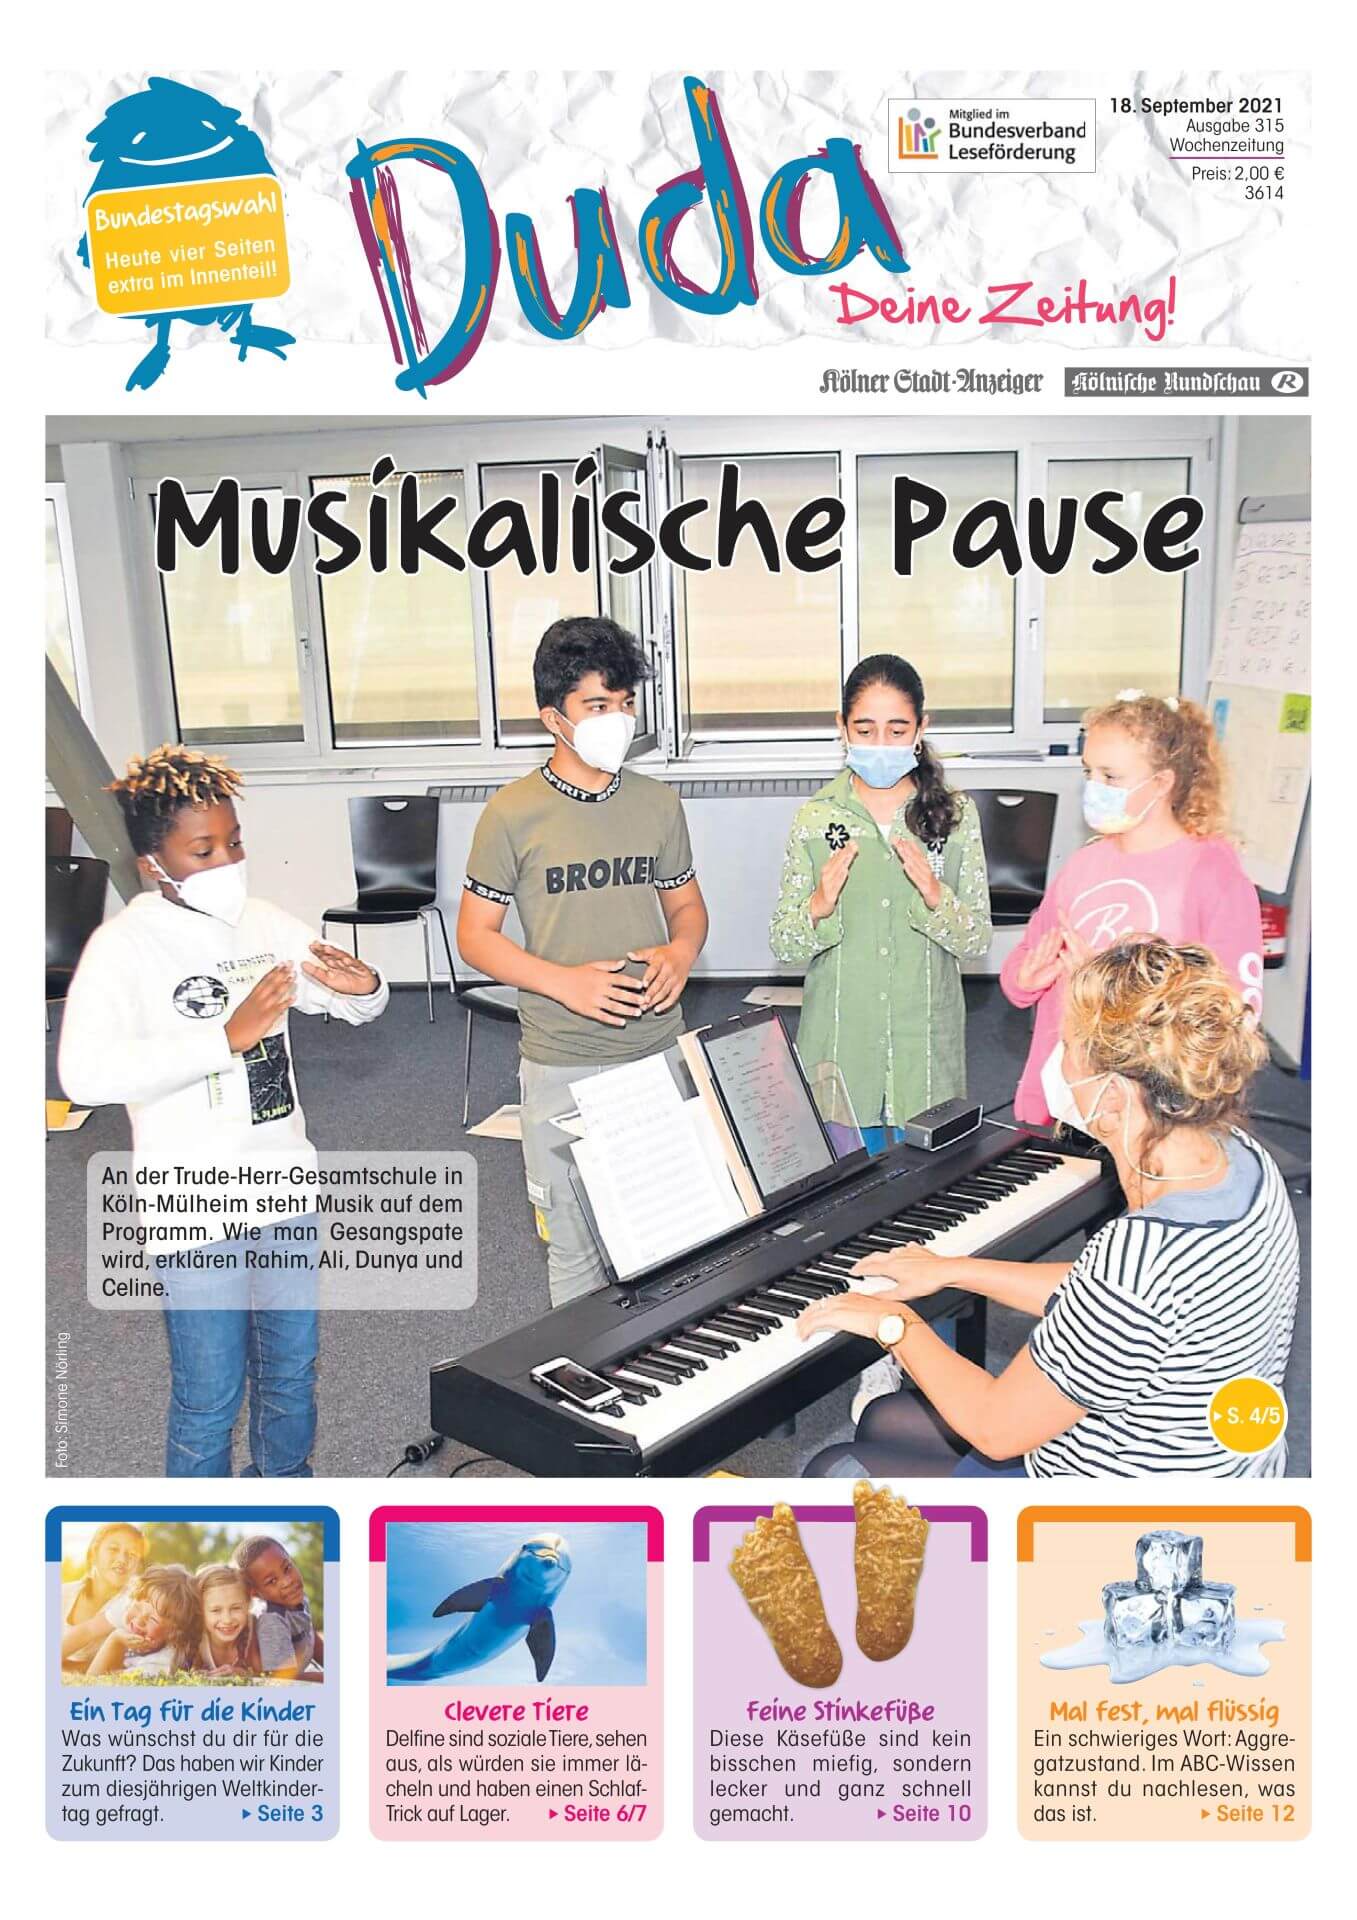 Vocal Break in Duda - Trude-Herr-Gesamtschule Köln-Mülheim - THG